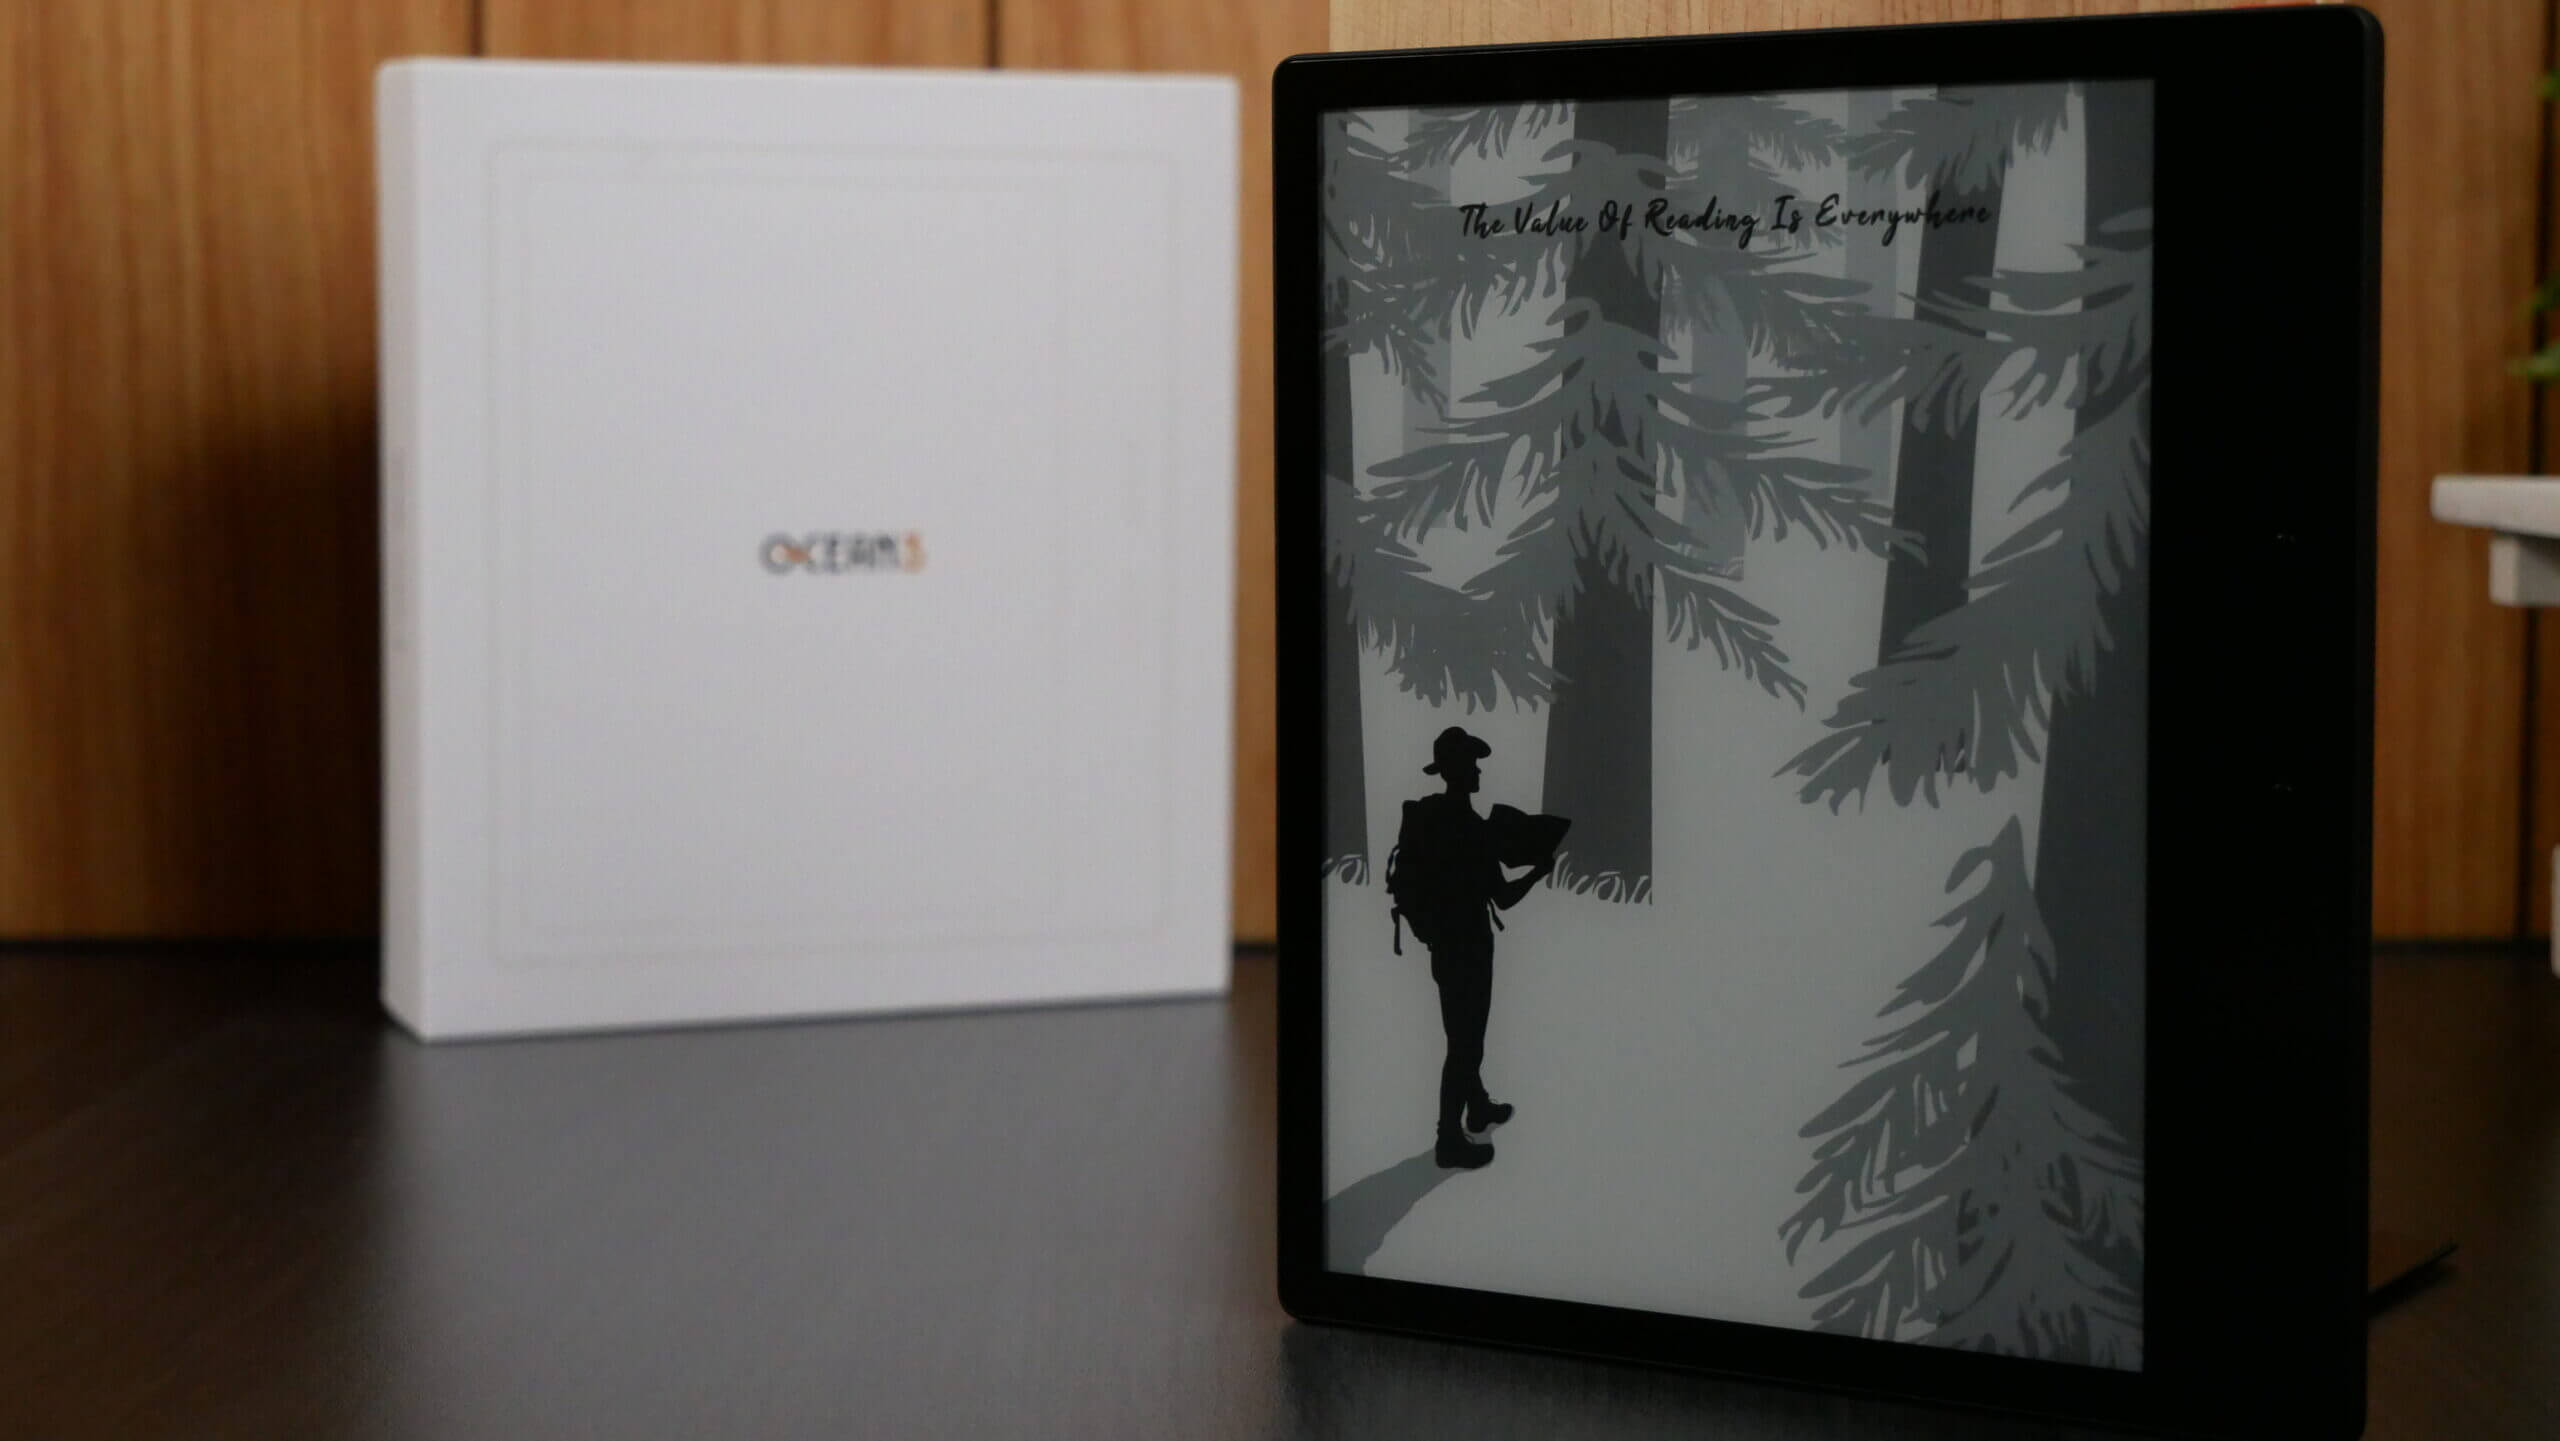 An  Kindle Oasis killer? First Look at the iReader Ocean 3 e-reader -  Good e-Reader